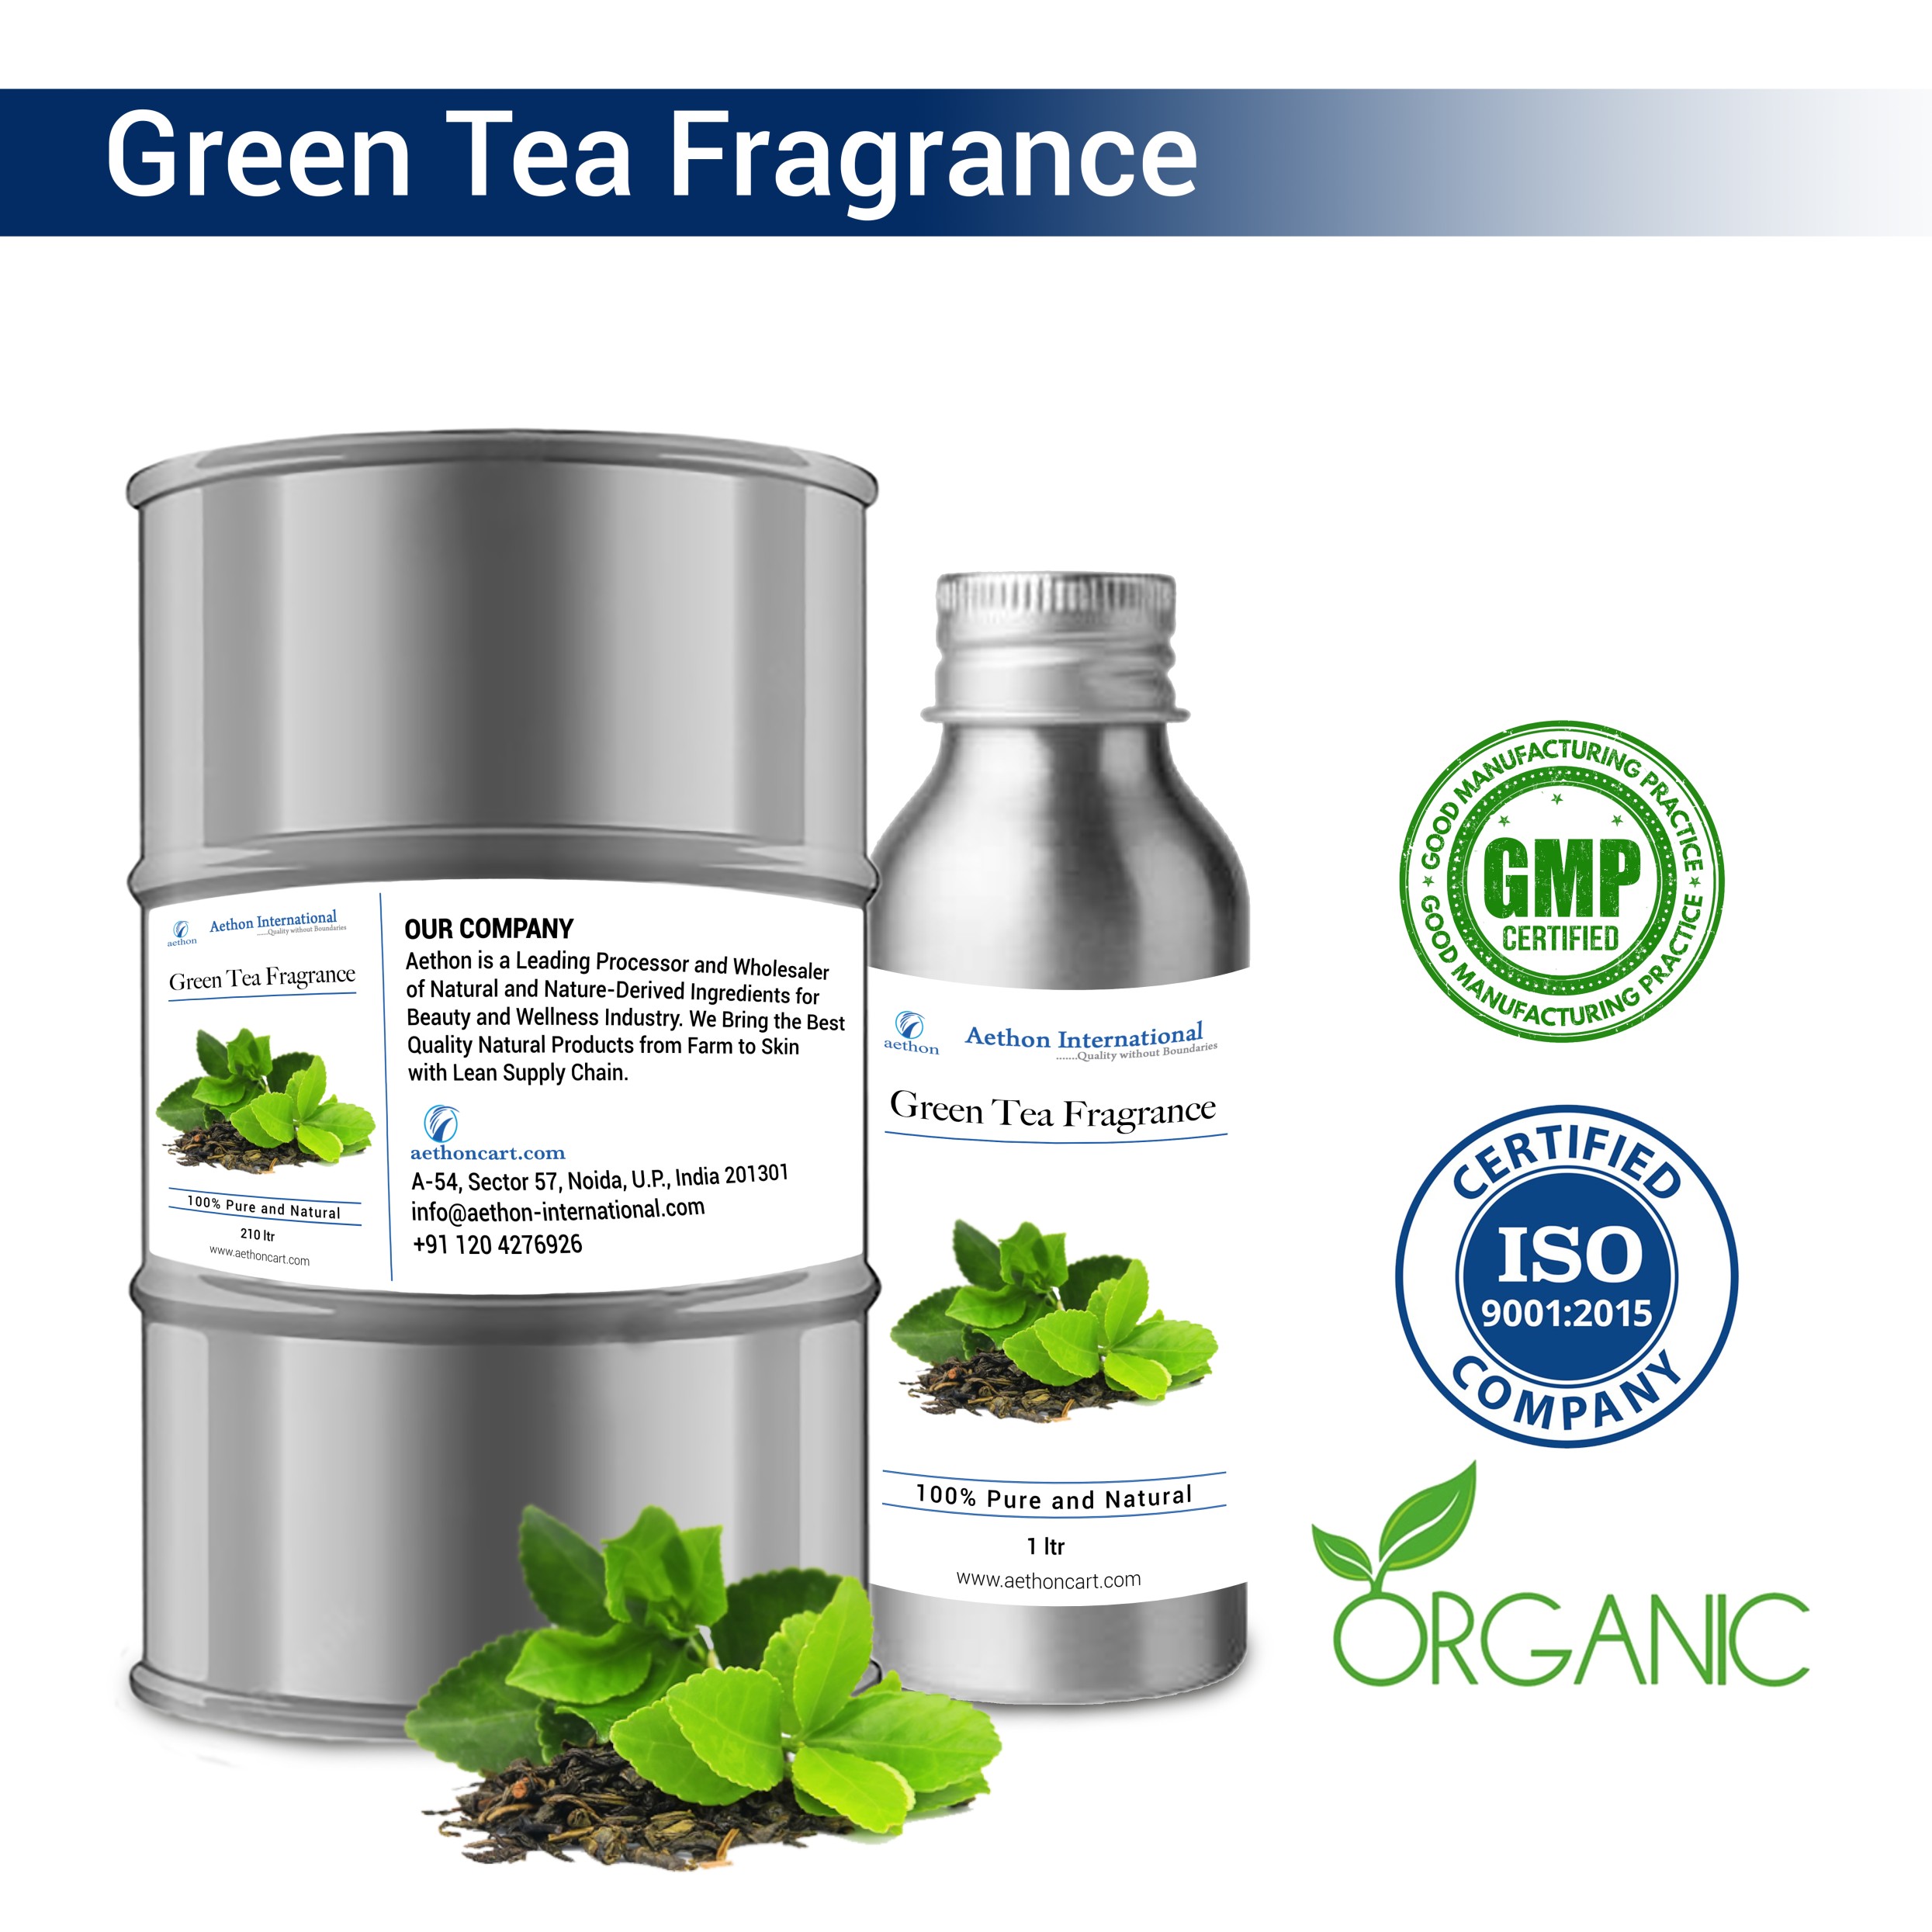 Green Tea Fragrance